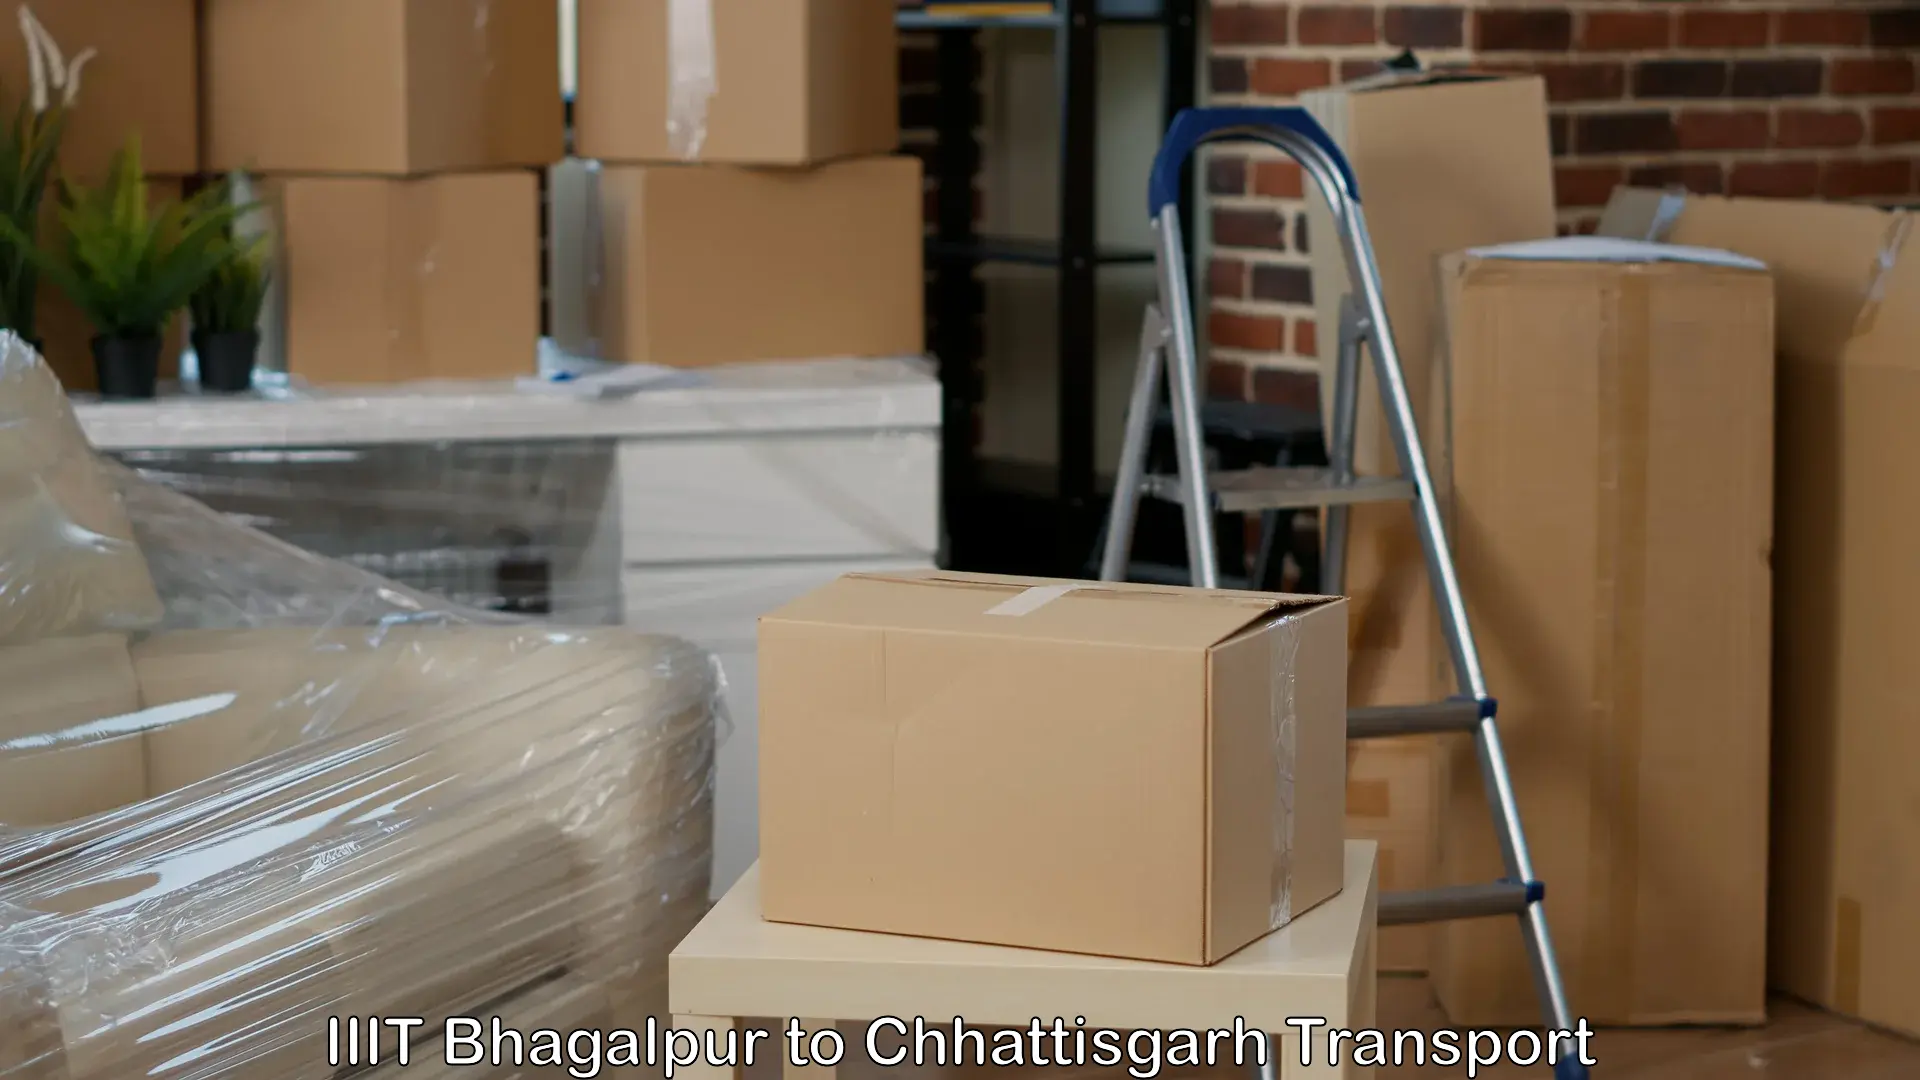 Bike shipping service IIIT Bhagalpur to Korea Chhattisgarh